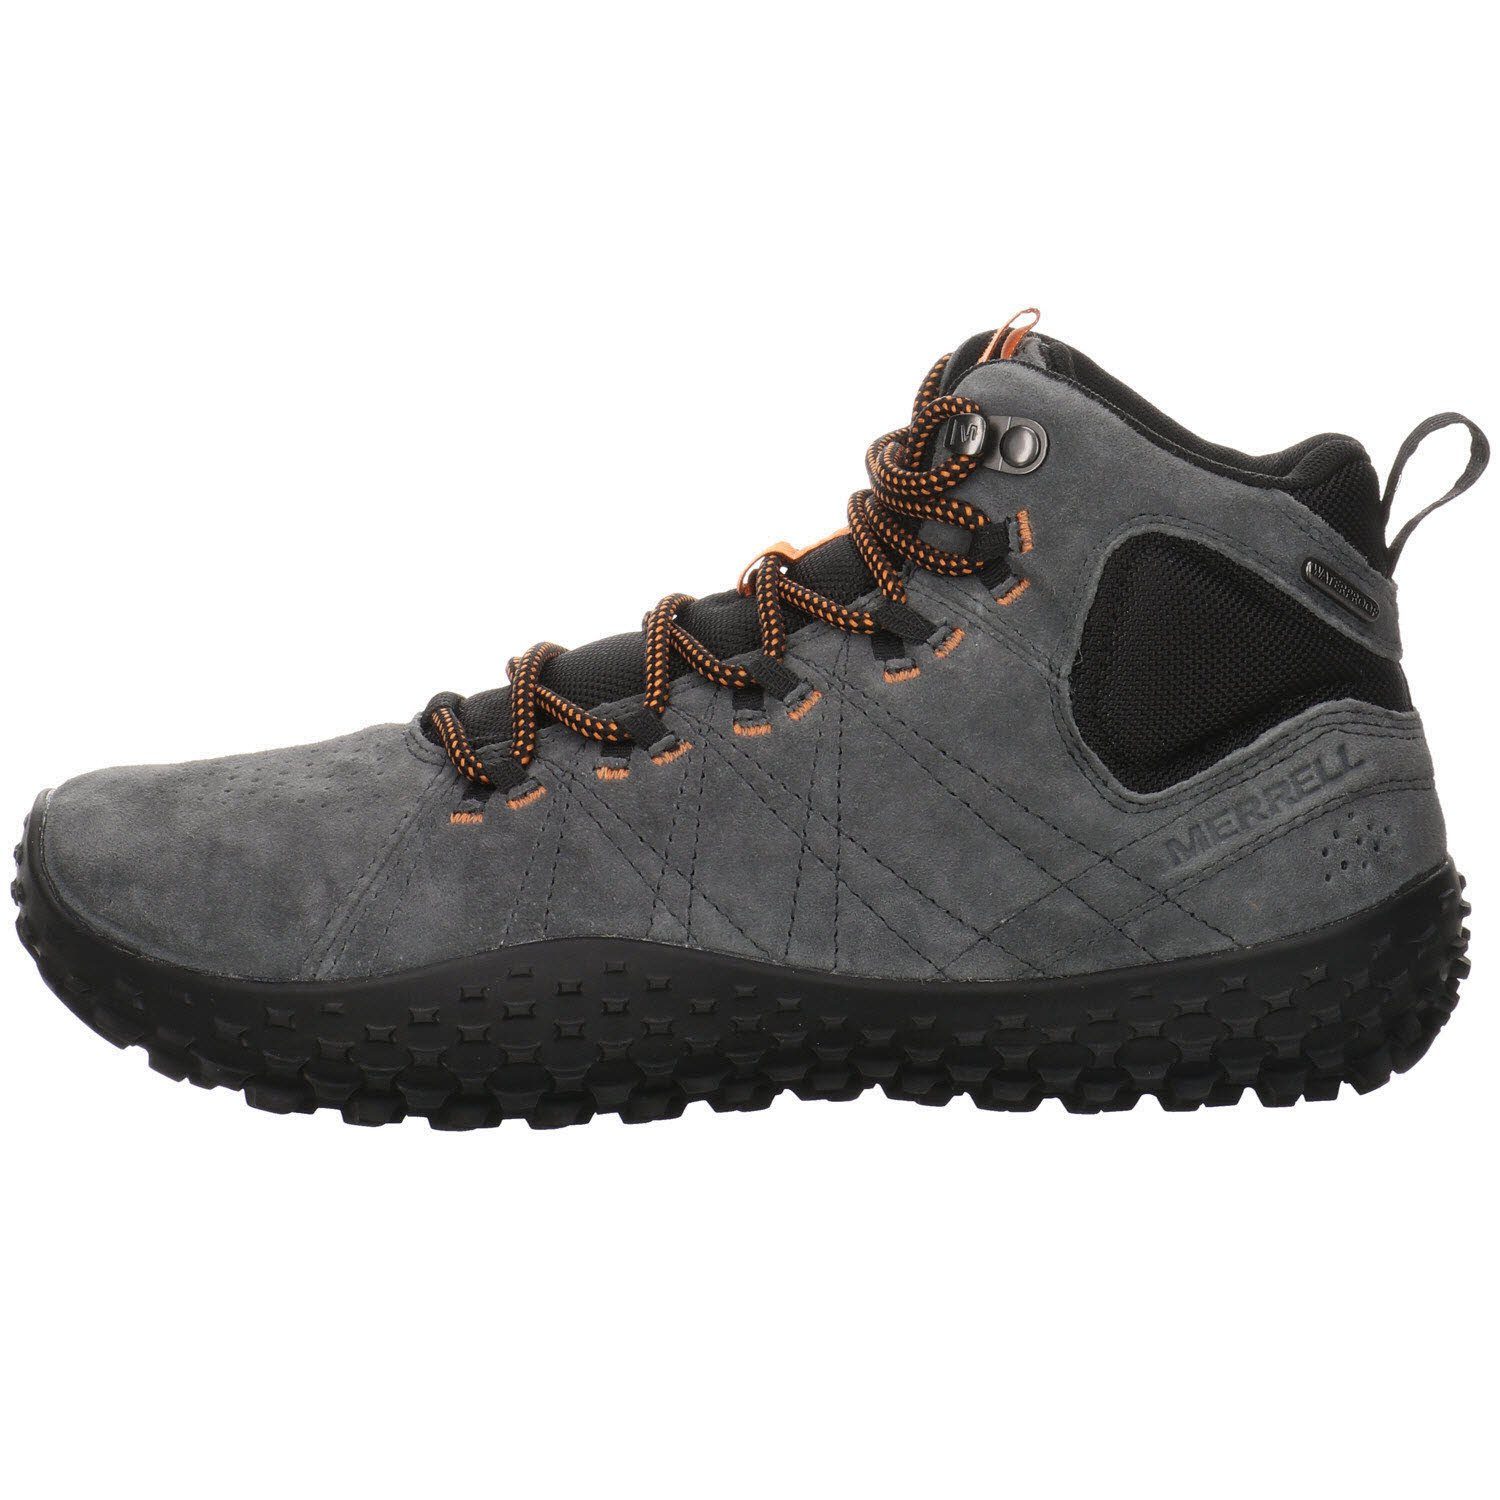 Merrell »Herren Outdoor Schuhe Wrapt Mid Outdoorschuh« Outdoorschuh  Leder-/Textilkombination online kaufen | OTTO